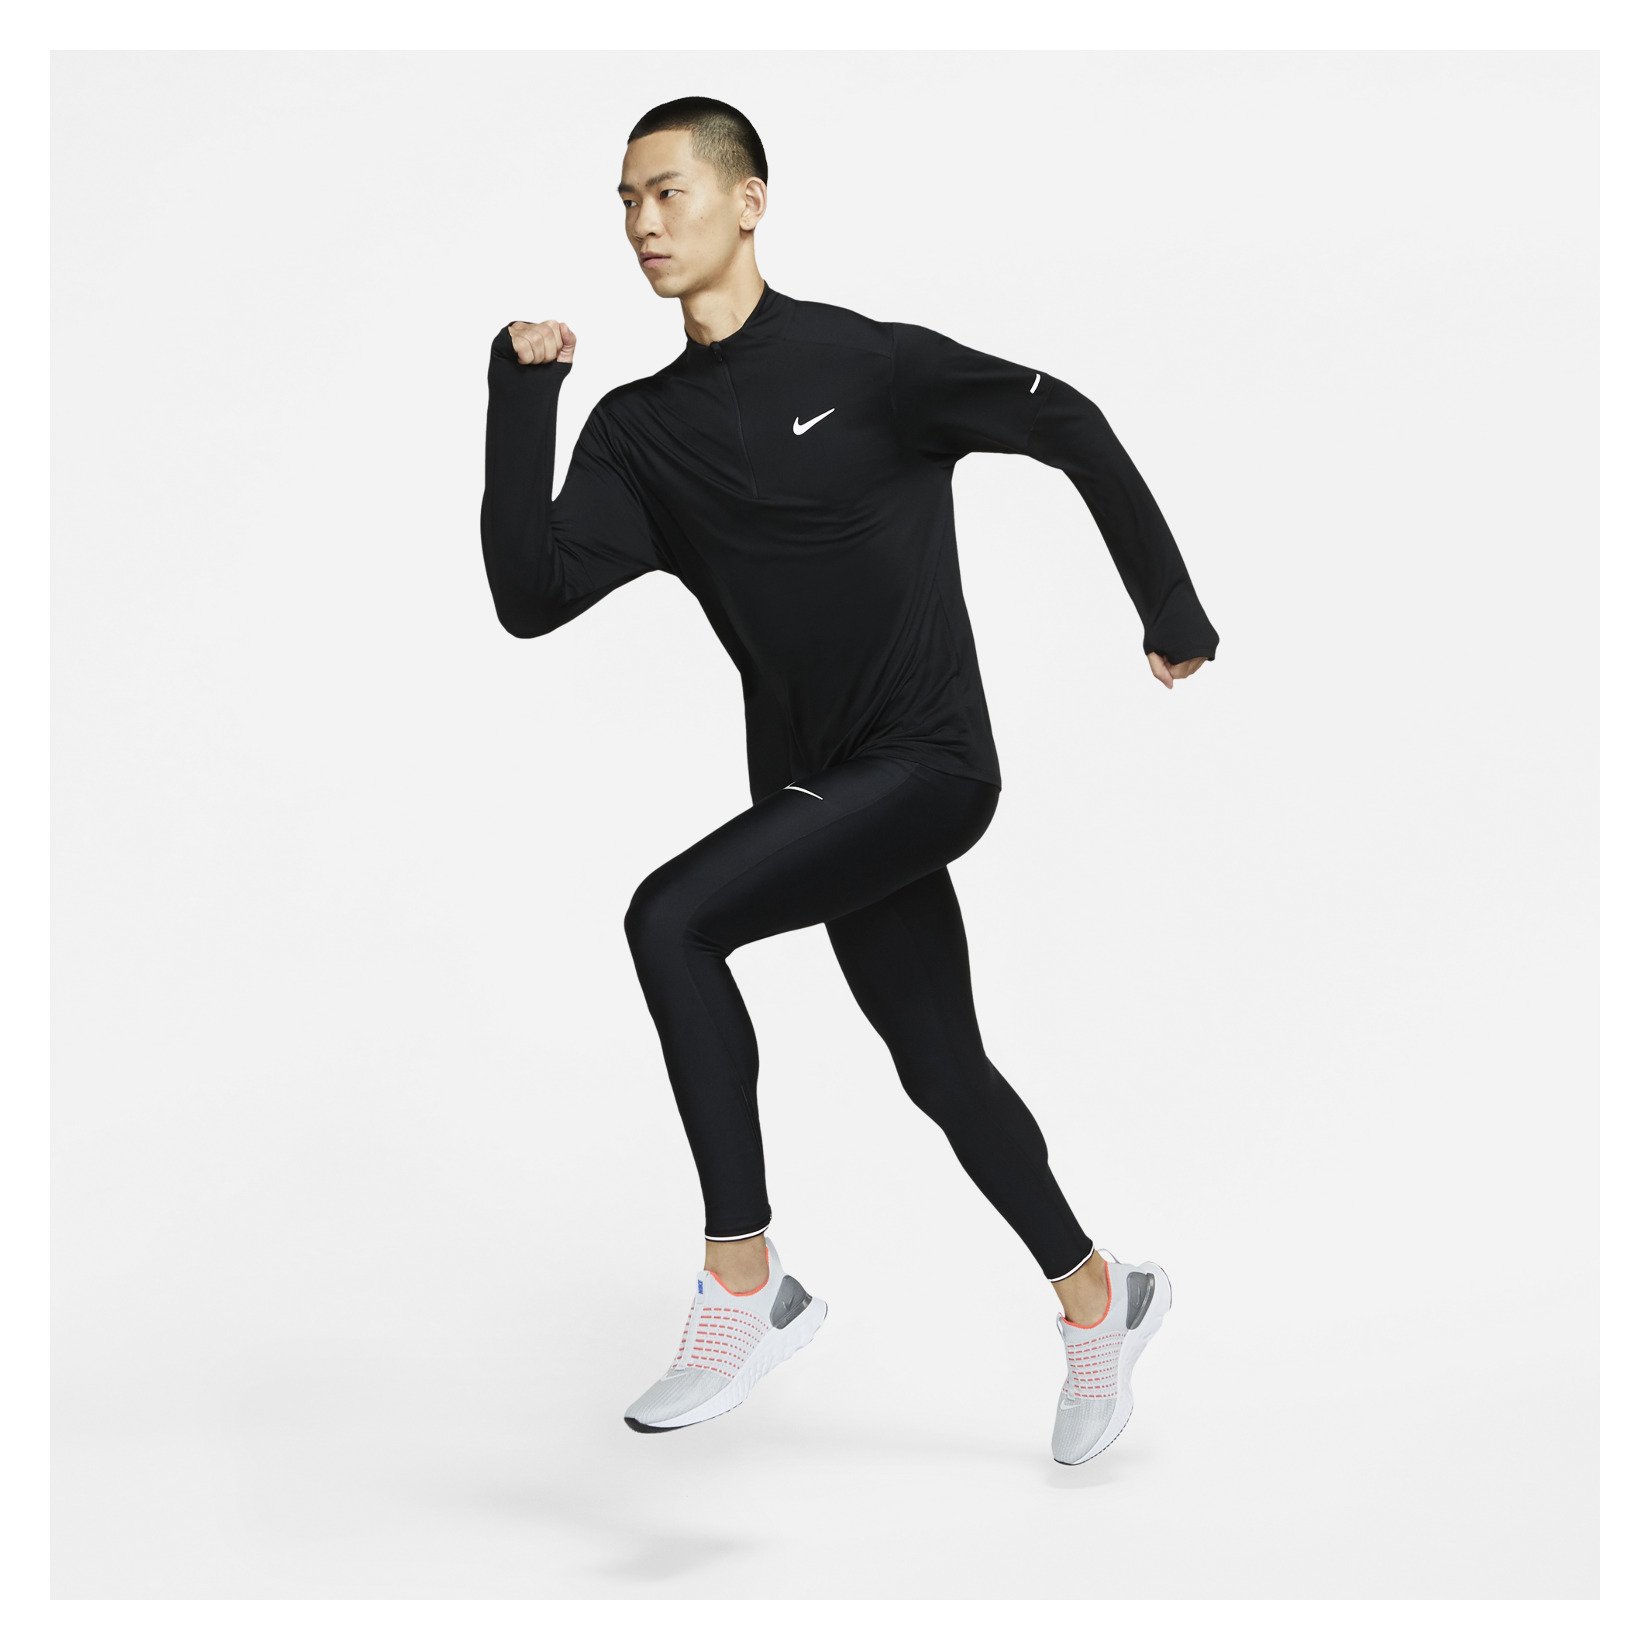 Nike Dri-FIT Element 1/4-Zip Running Top